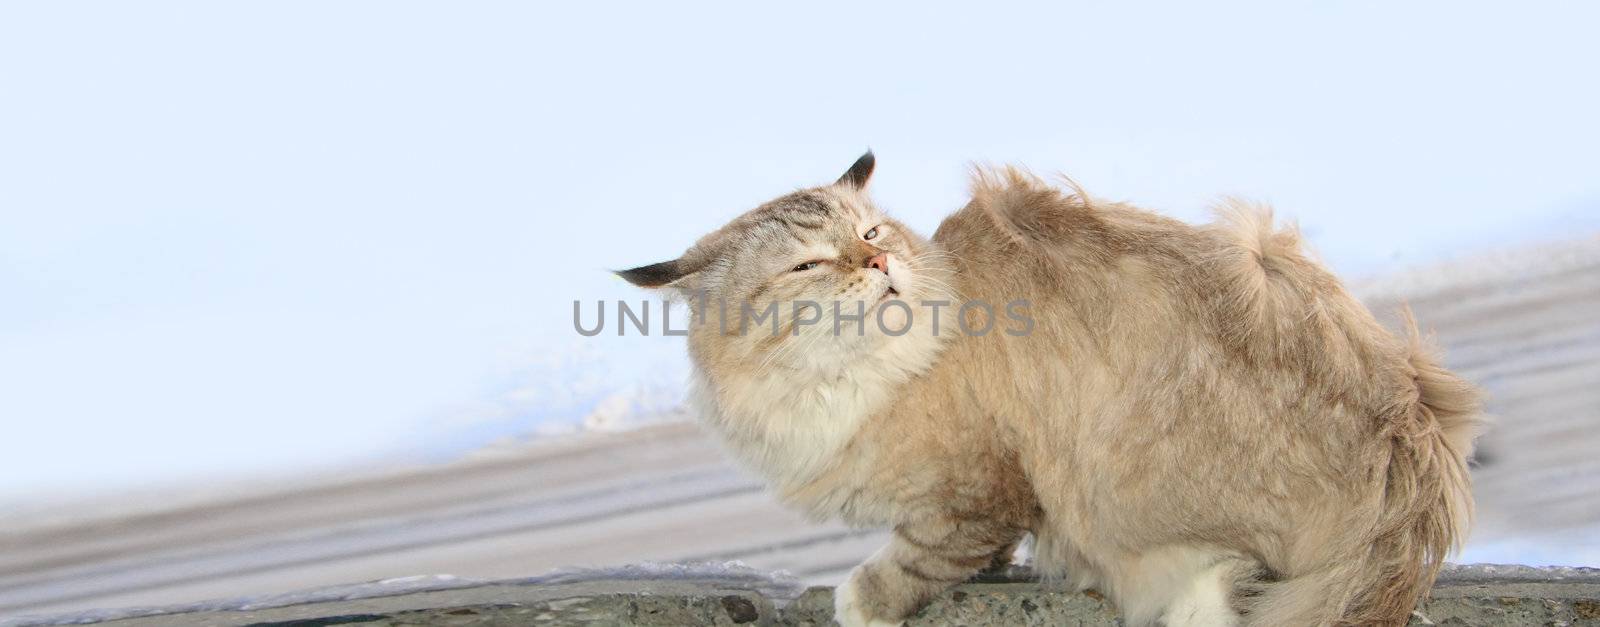 Frozen cat in the wind, winter